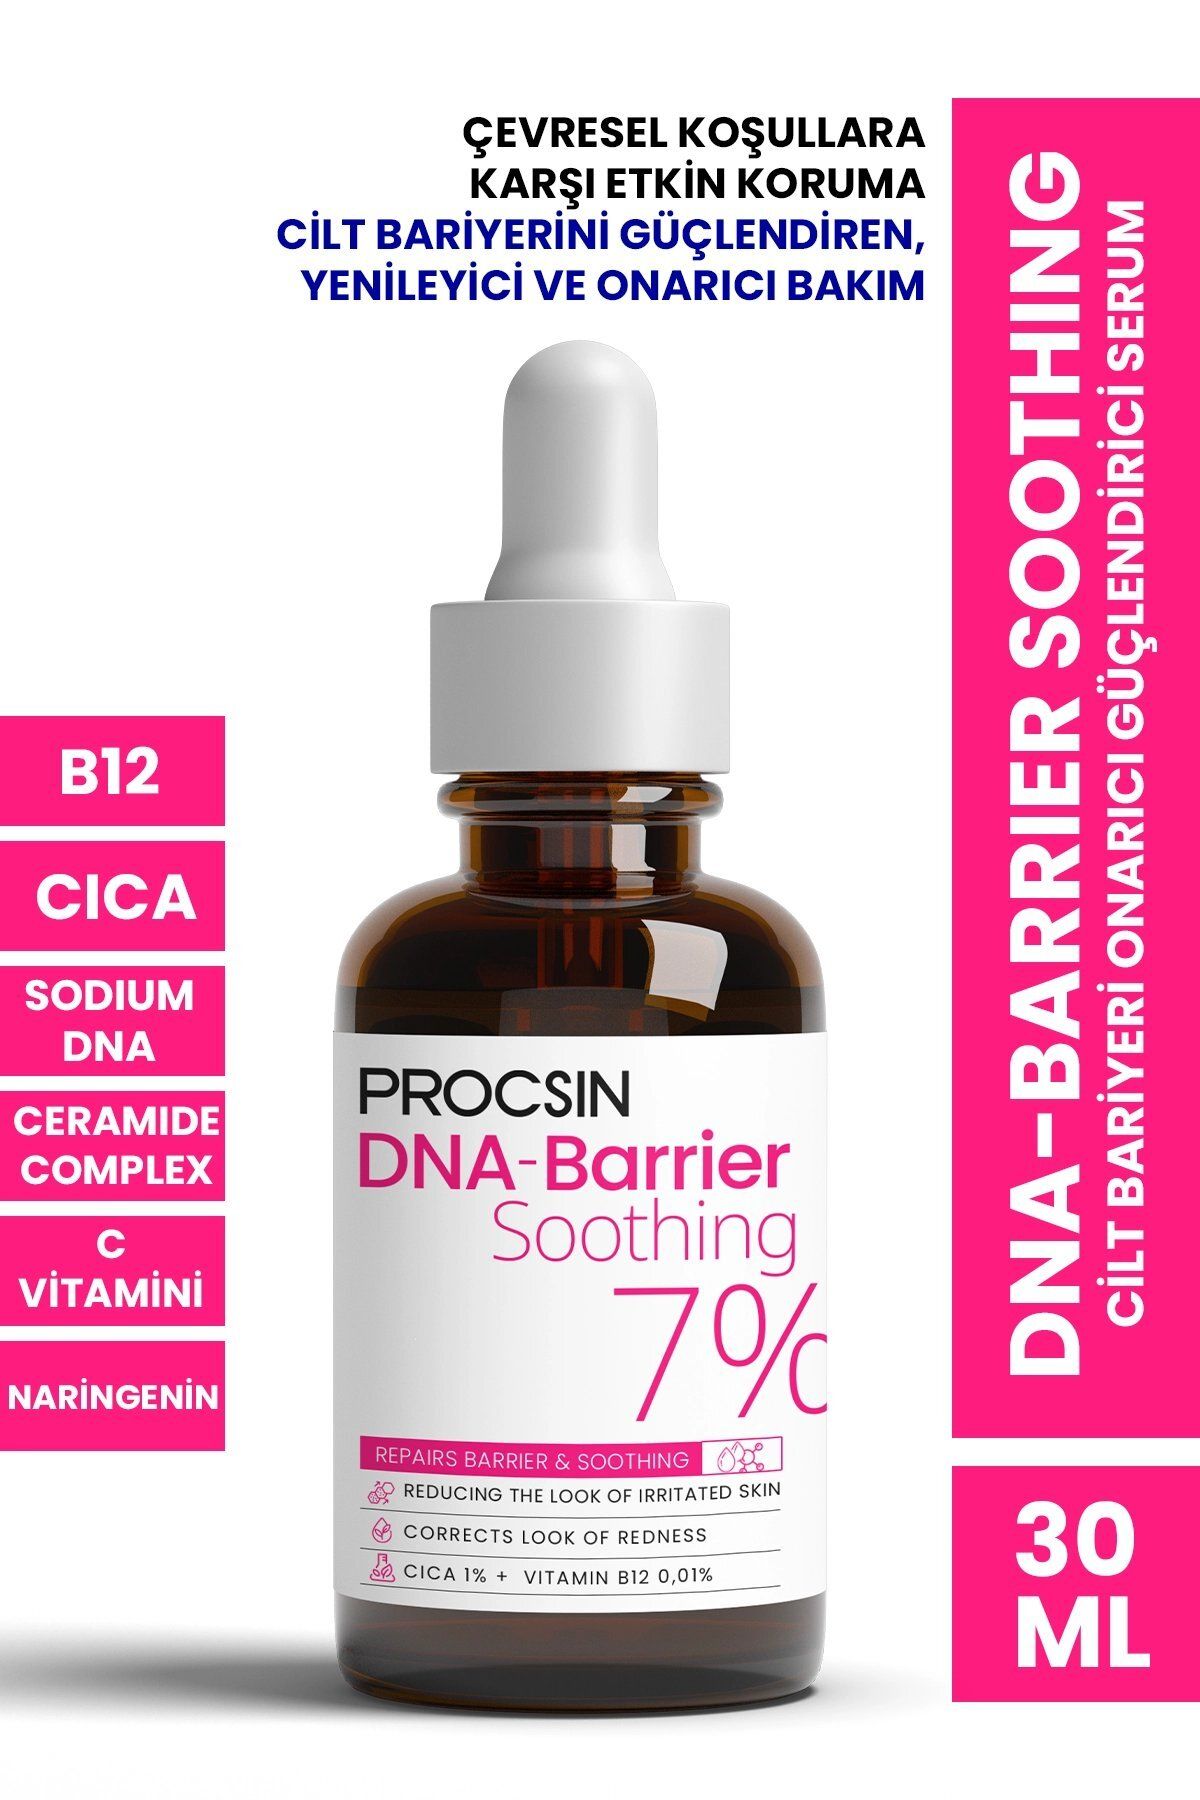 PROCSIN Dna-barrier Soothing Cilt Bariyeri Onarıcı Güçlendirici Serum 30 ml